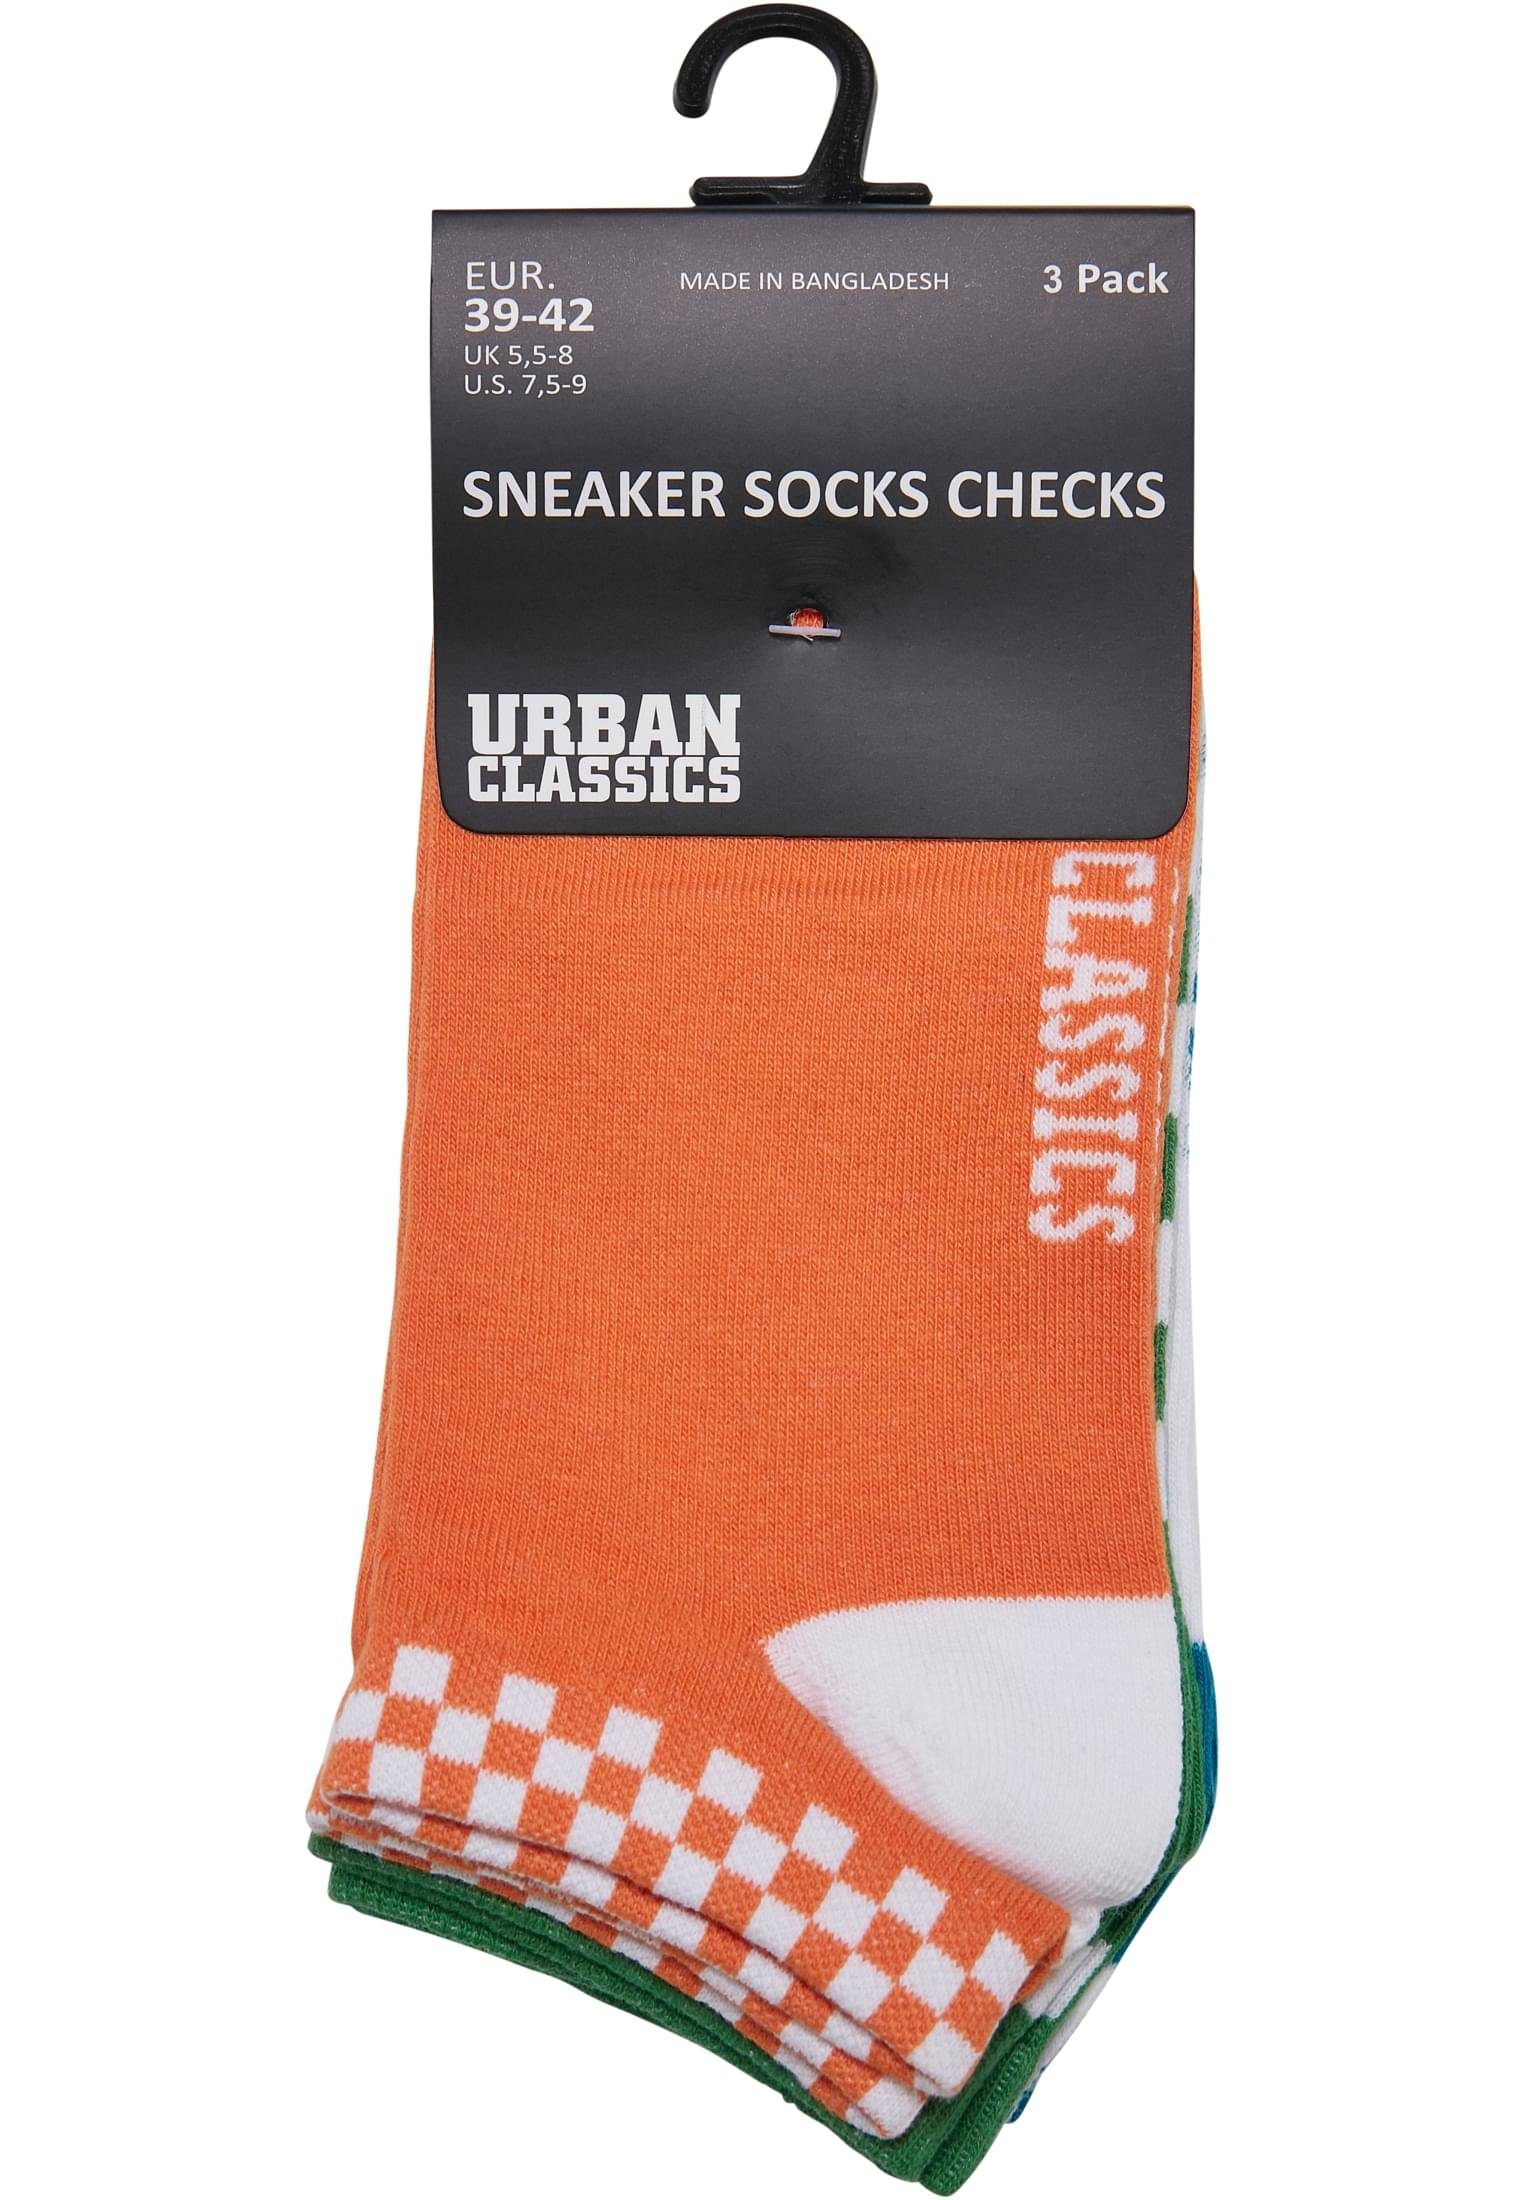 URBAN CLASSICS Freizeitsocken Accessoires Sneaker orange/green/teal Checks 3-Pack (1-Paar) Socks